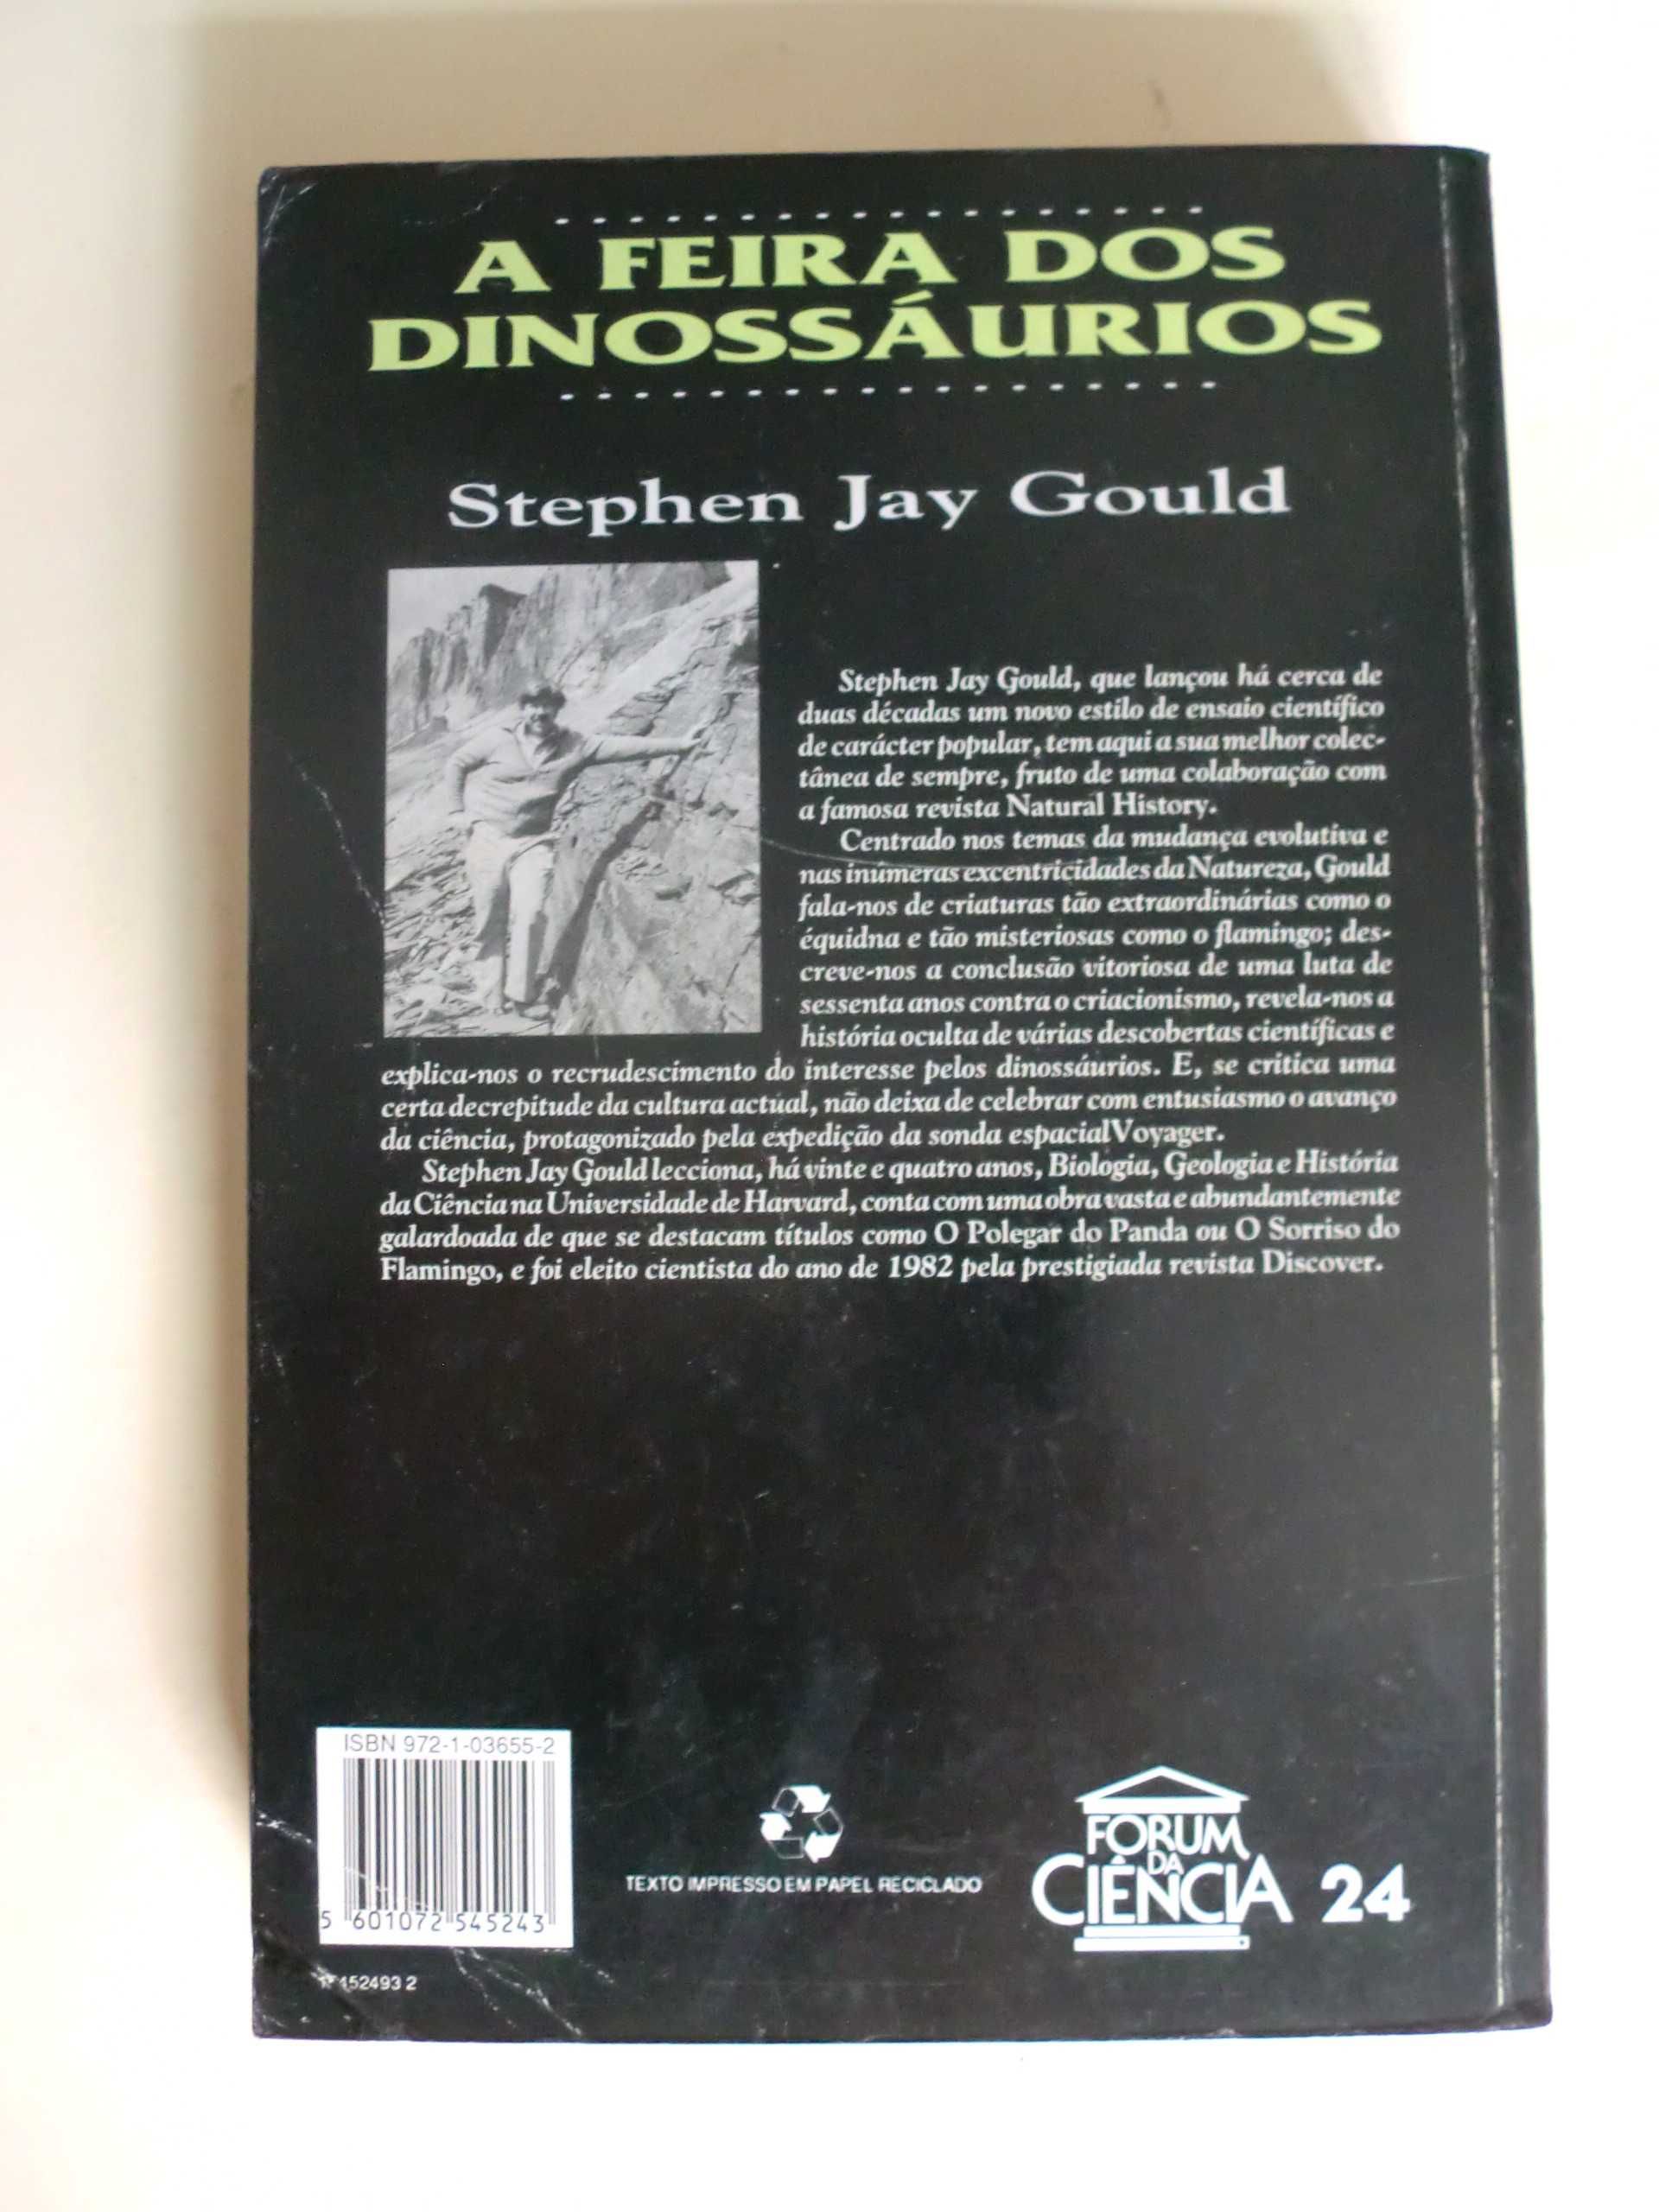 A Feira dos Dinossáurios
de Stephen Jay Gould